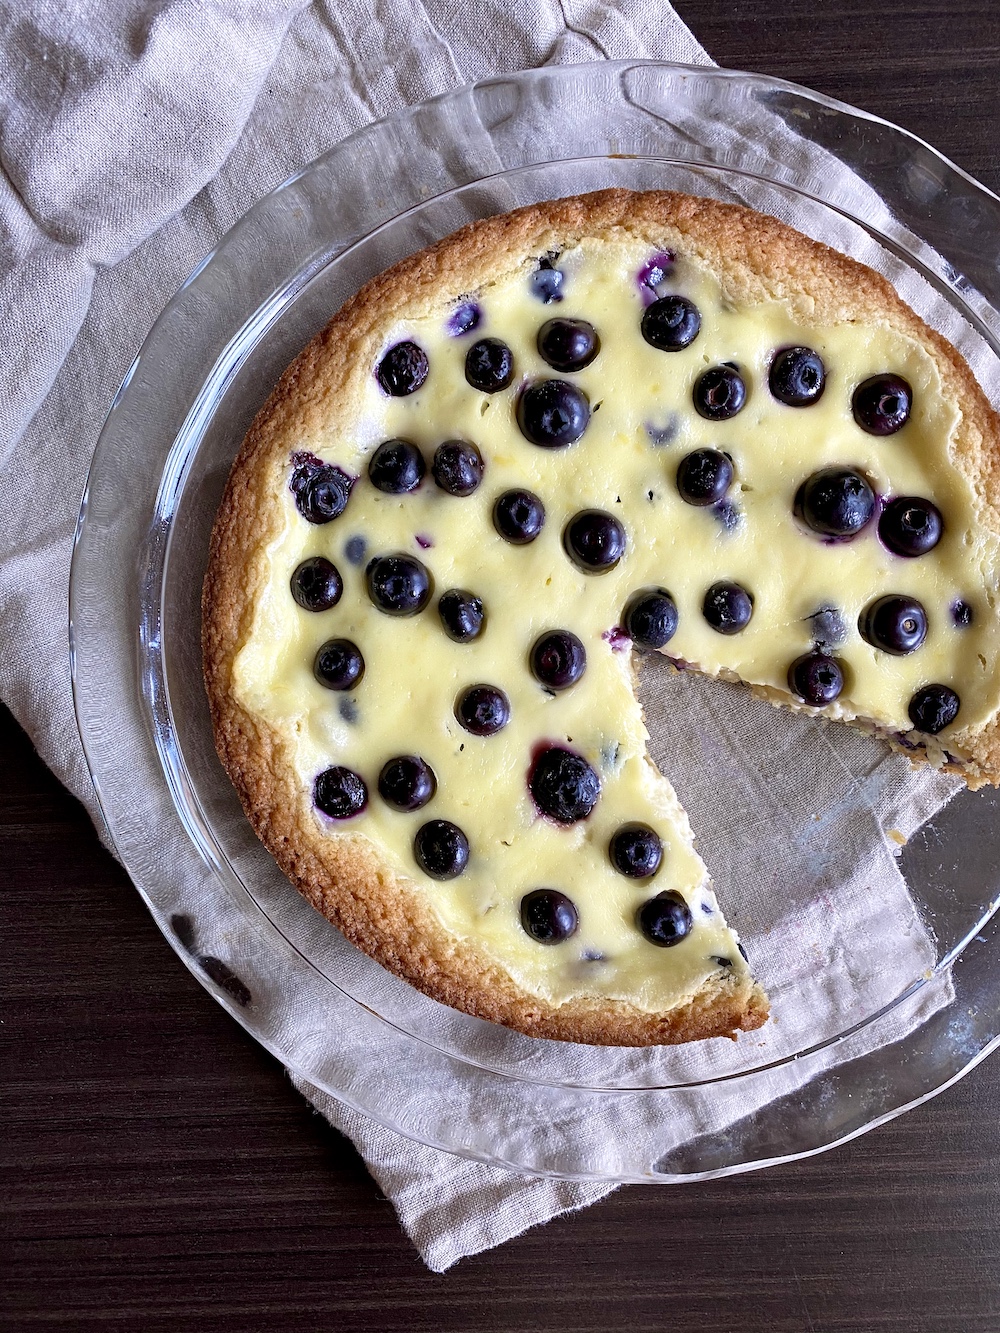 Finnish Blueberry Pie [Mustikkapiirakka] | Globally Flavored